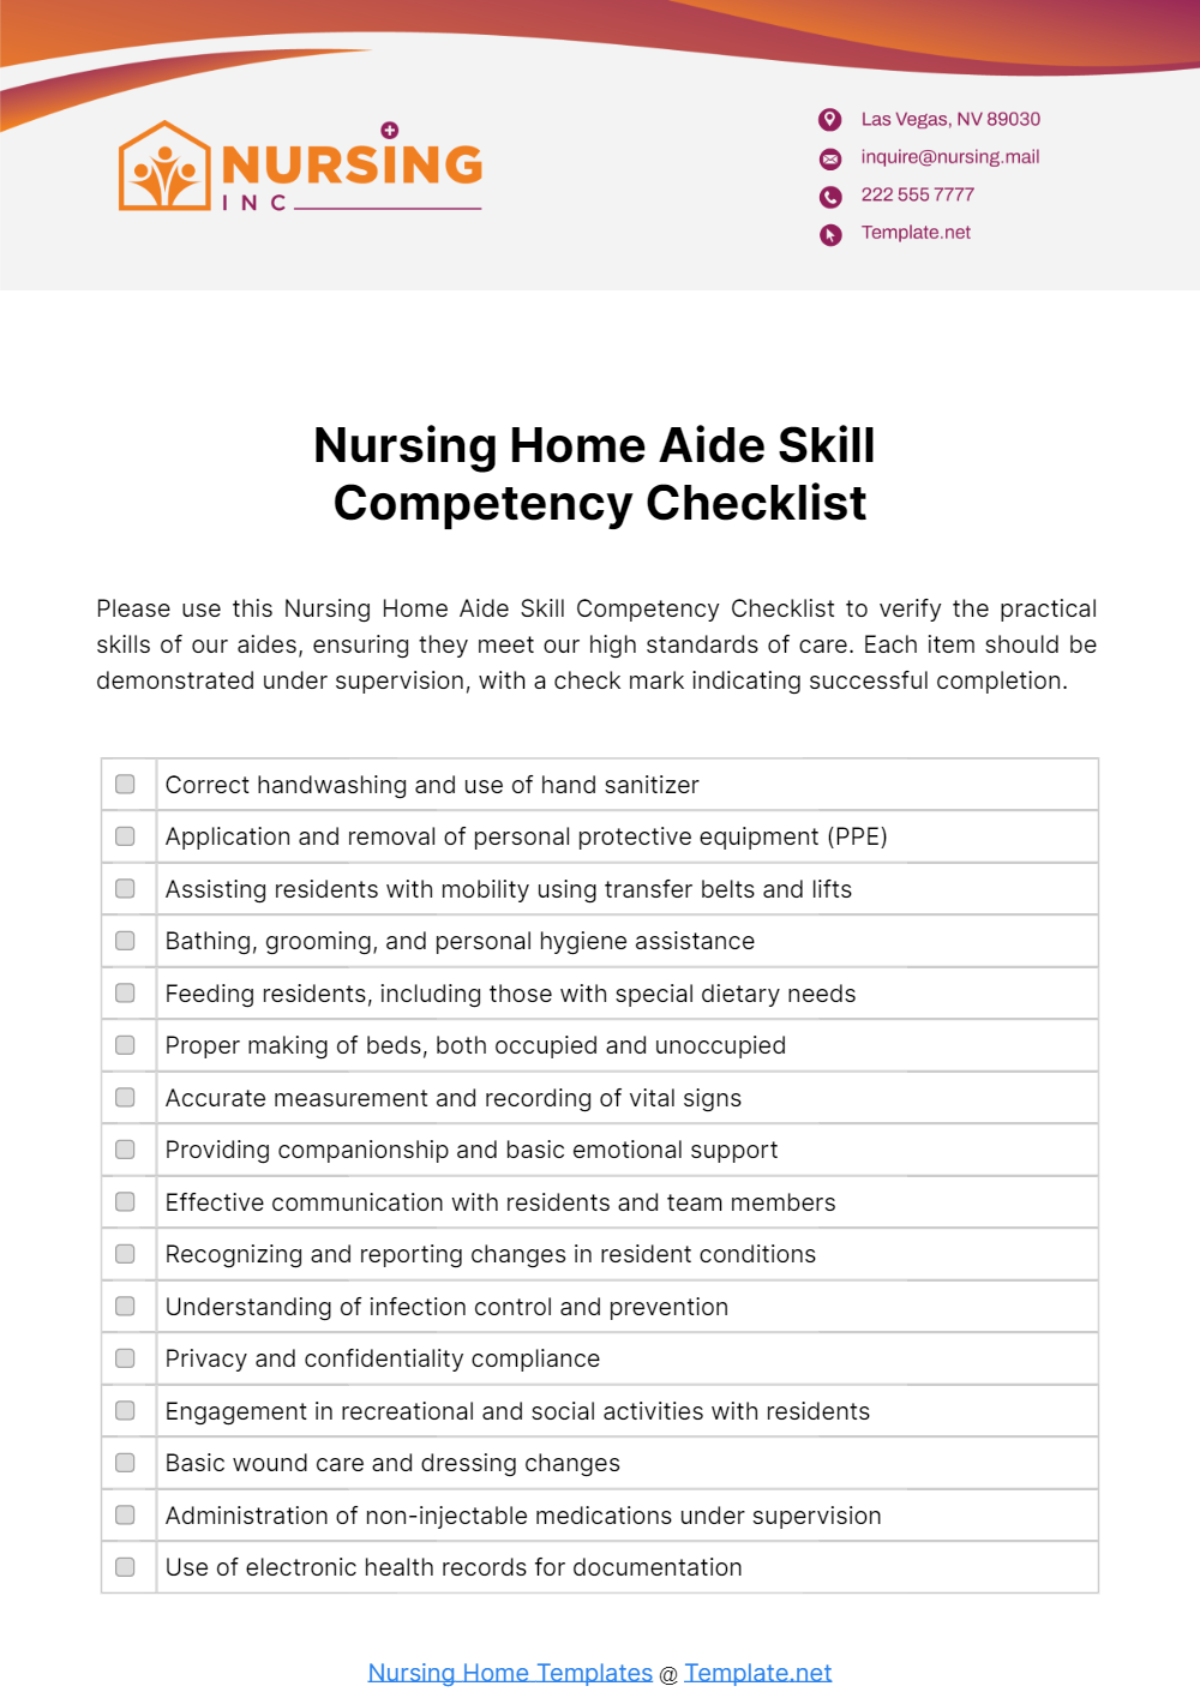 Nursing Home Aide Skill Competency Checklist Template